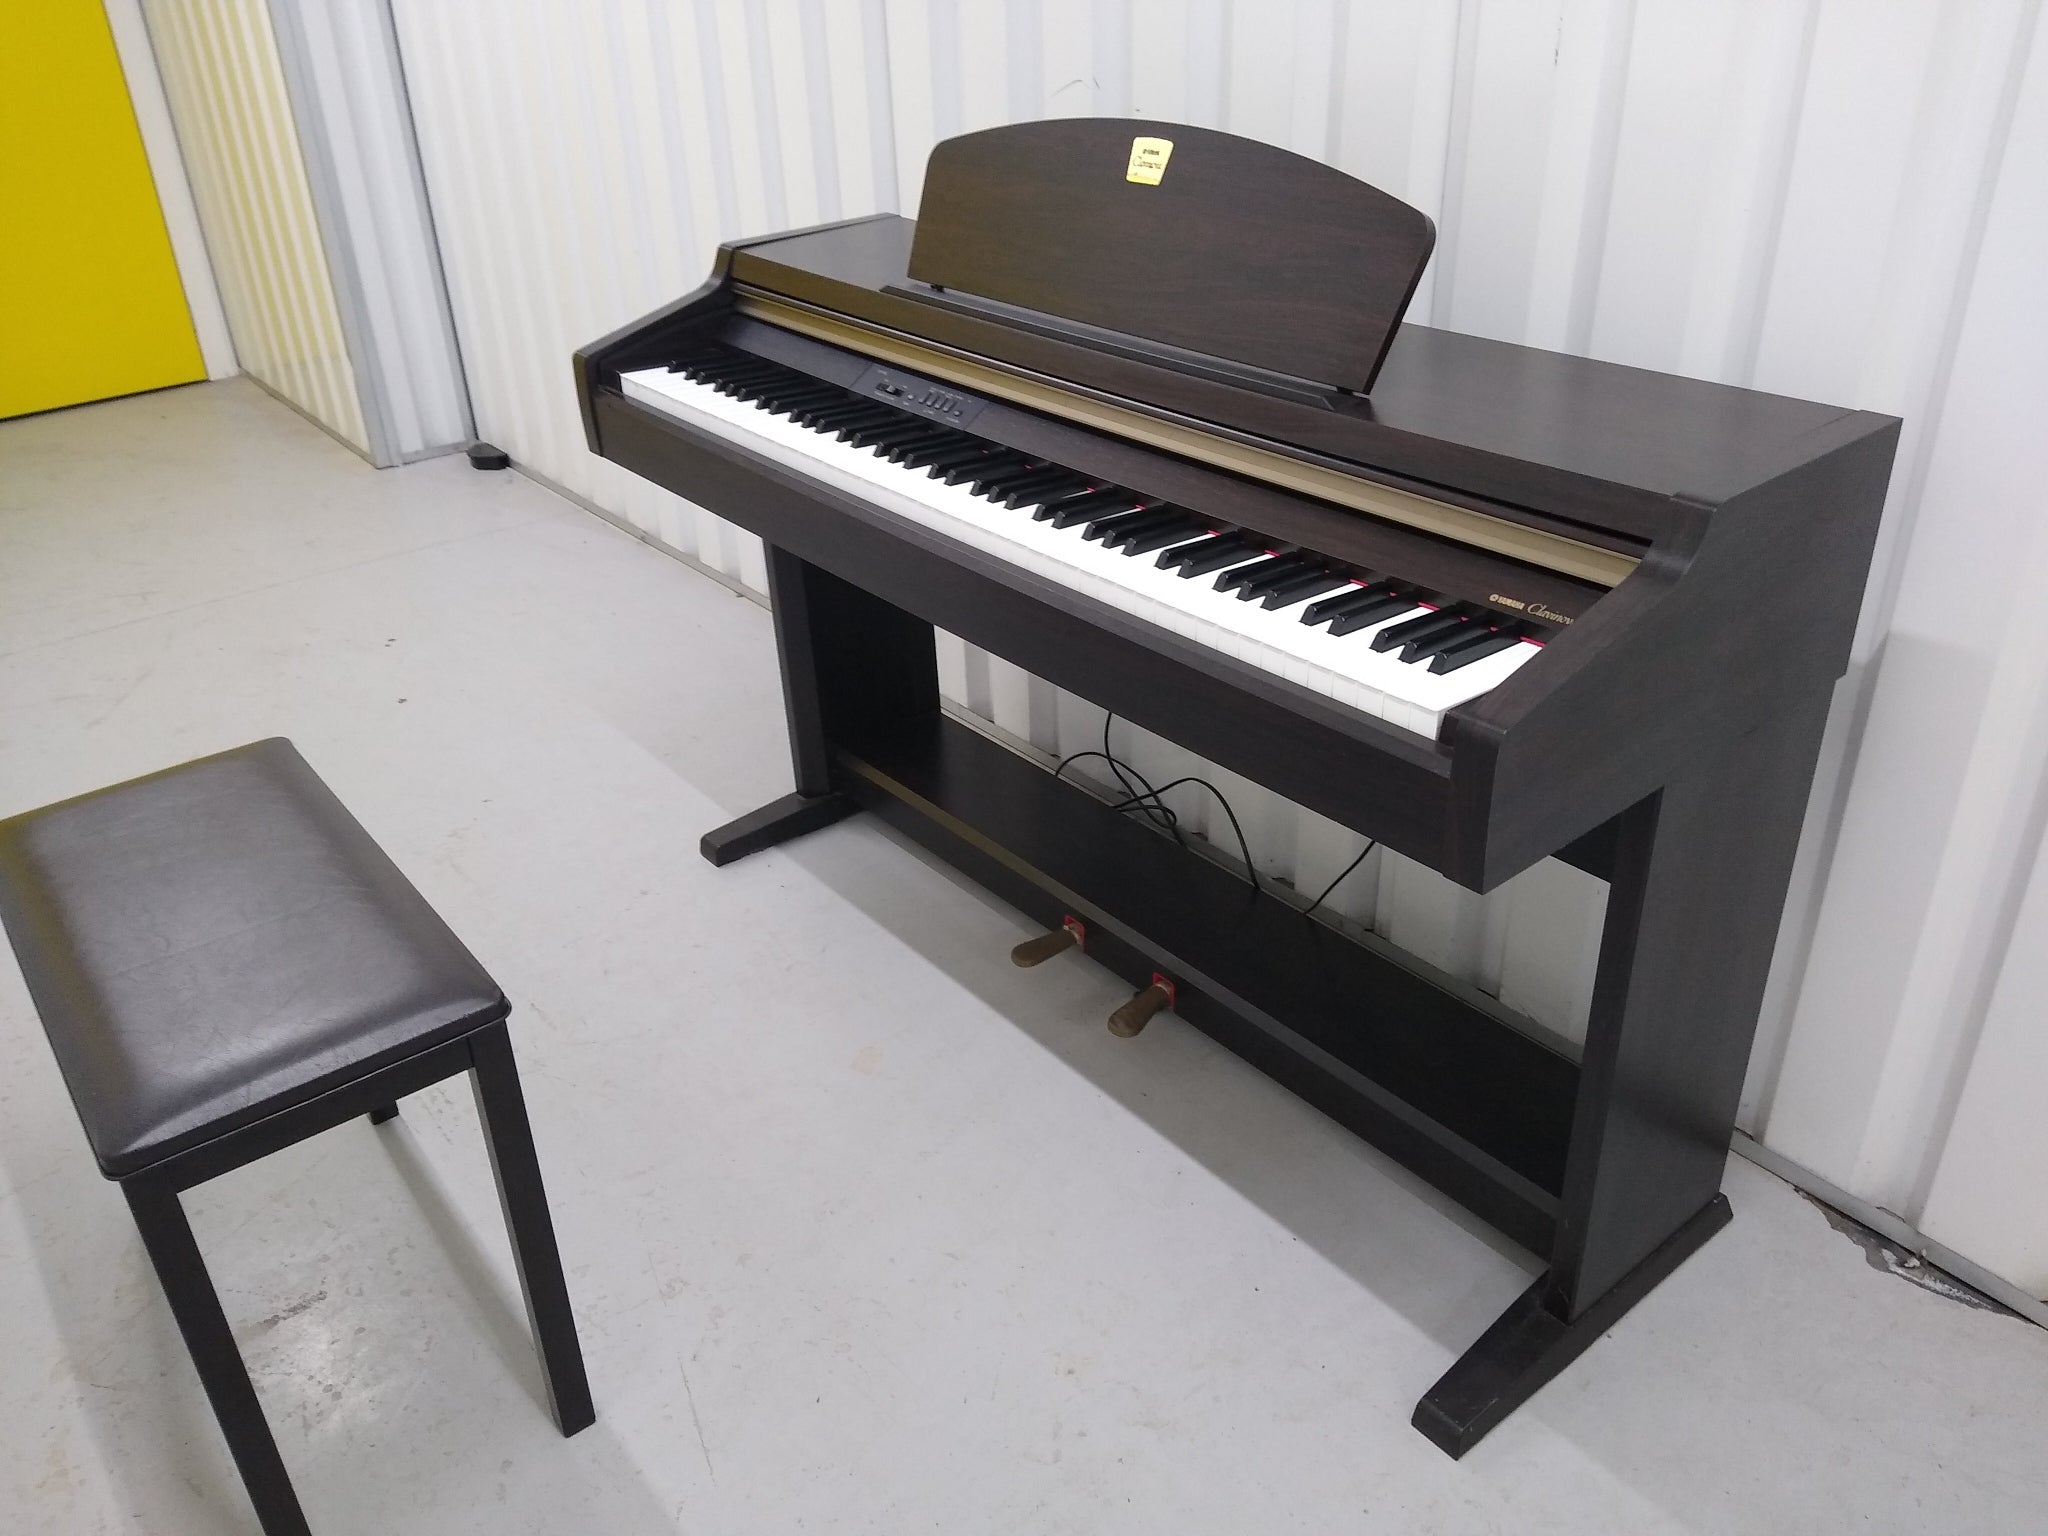 Piano numérique Yamaha Clavinova CLP-920 occasion